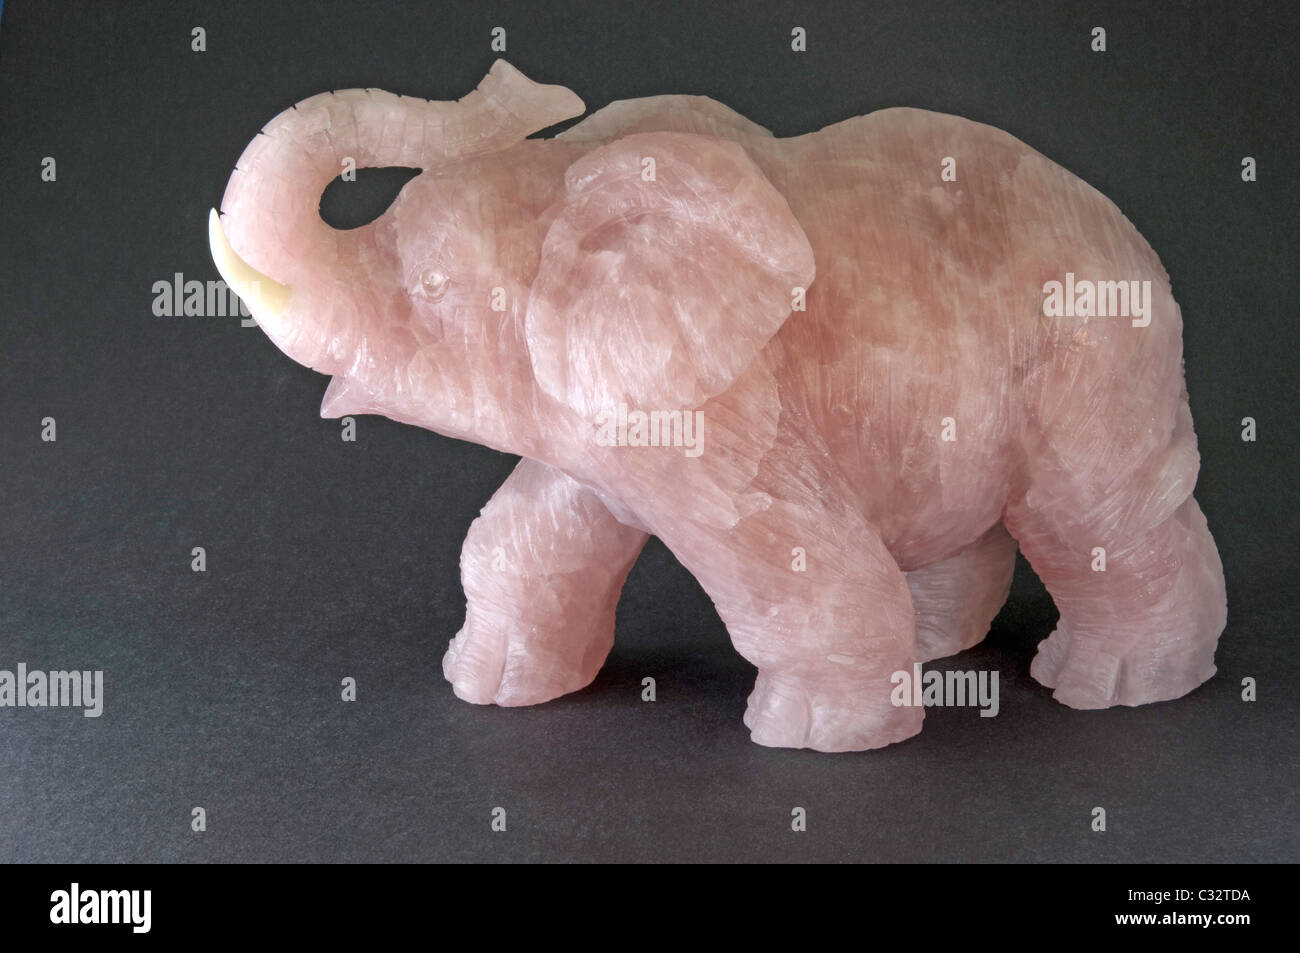 Elephant made of Rose Quartz, studio picture against a dark background. Stock Photo